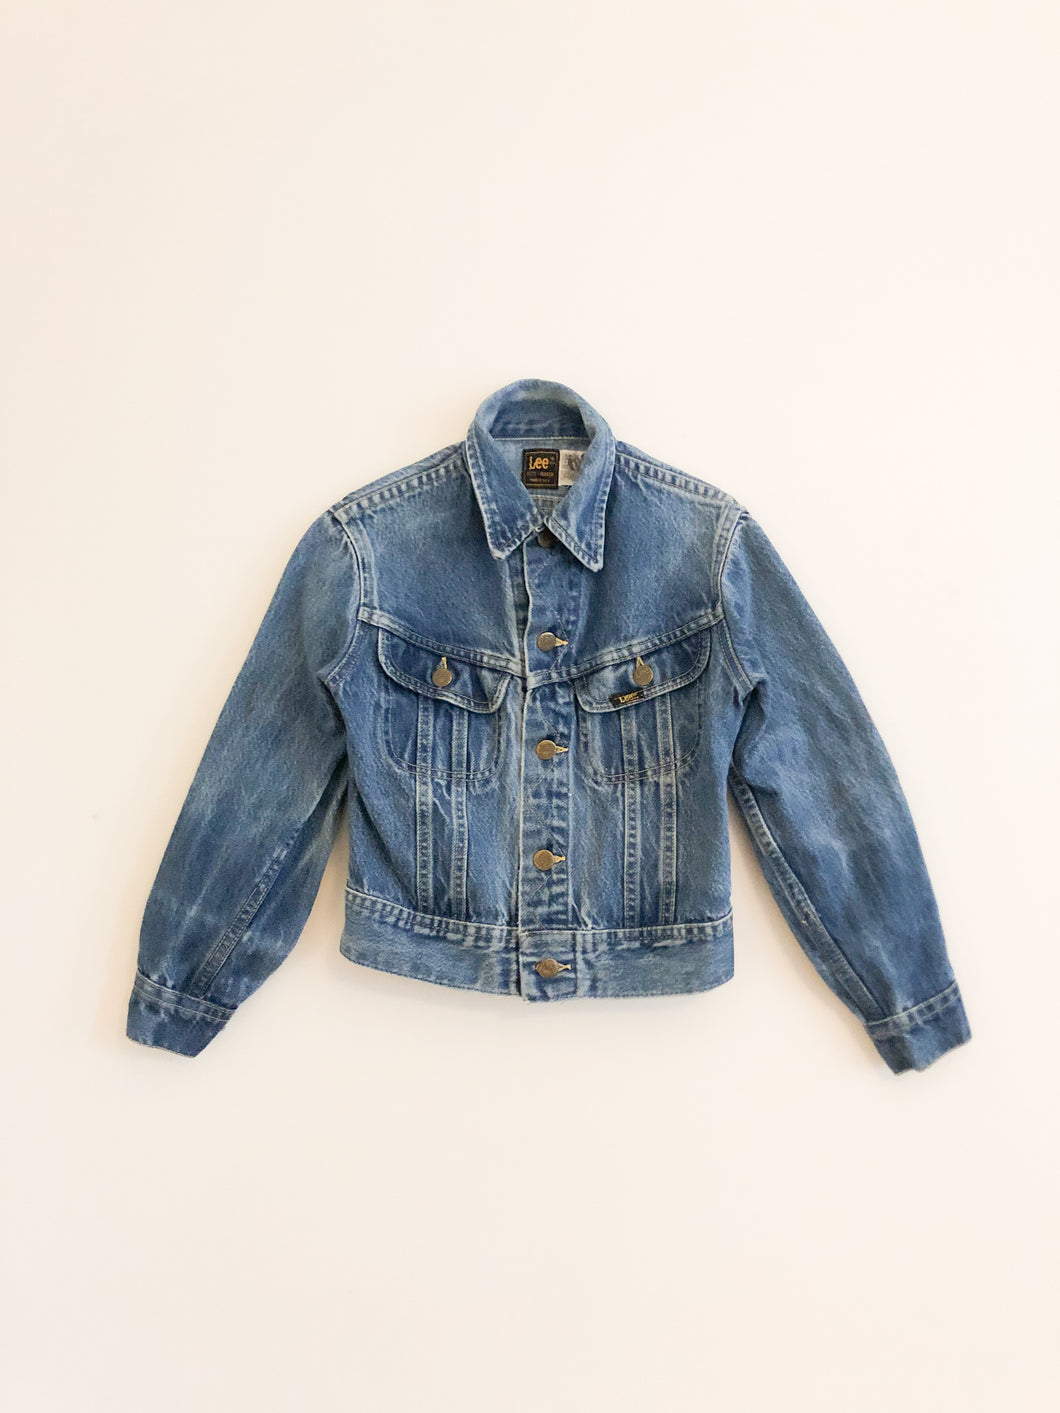 Vintage Jean Jacket